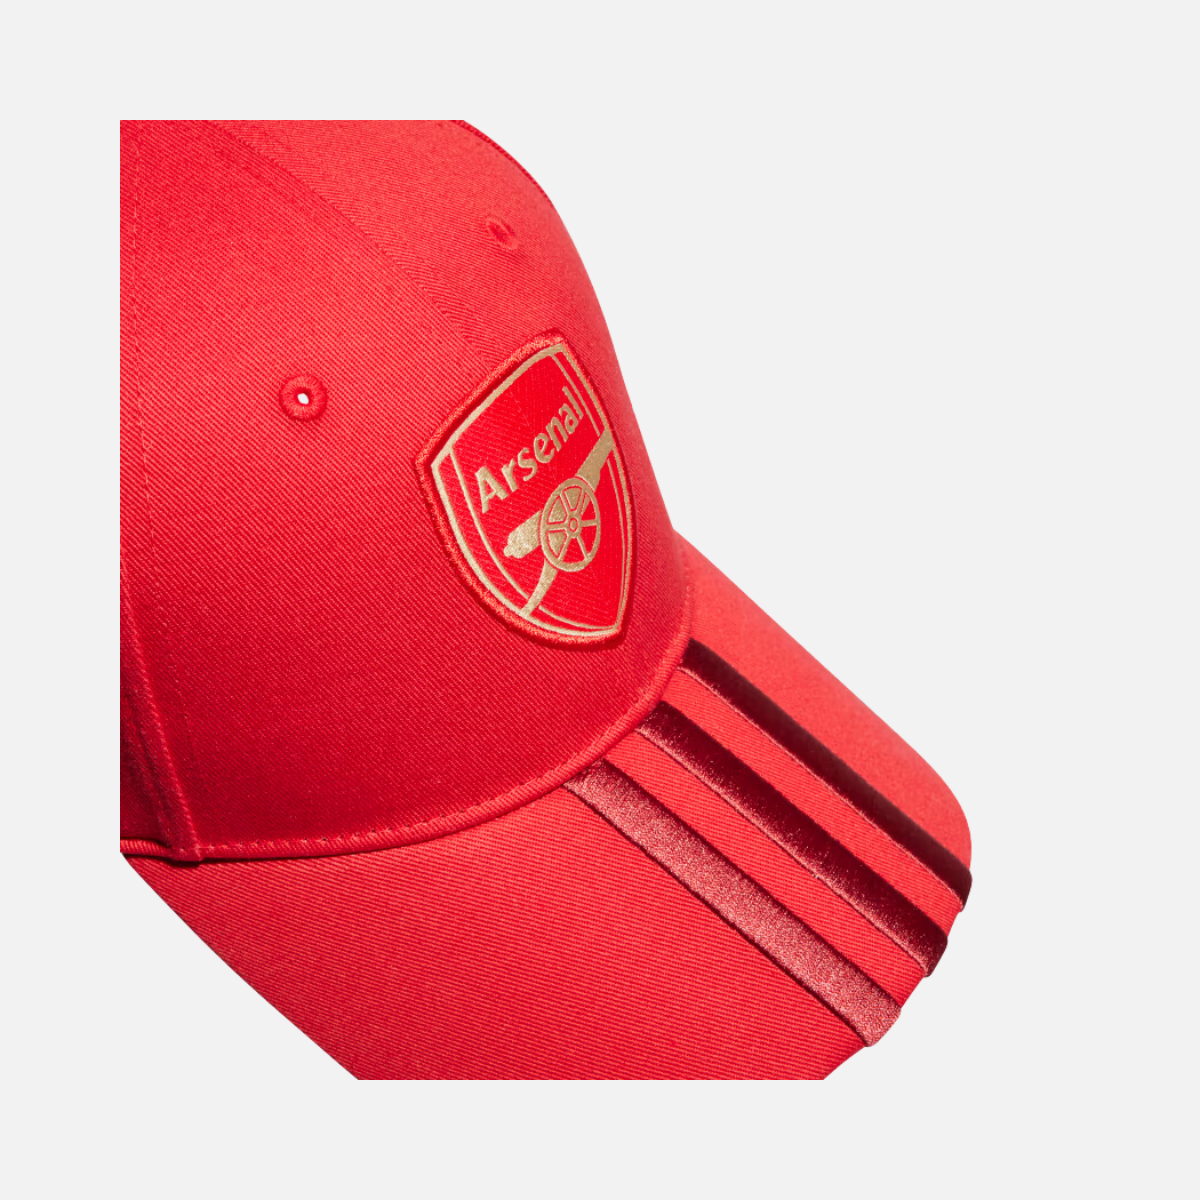 Adidas Arsenal Home Football Cap -Better Scarlet/Craft Red/Light Football Gold